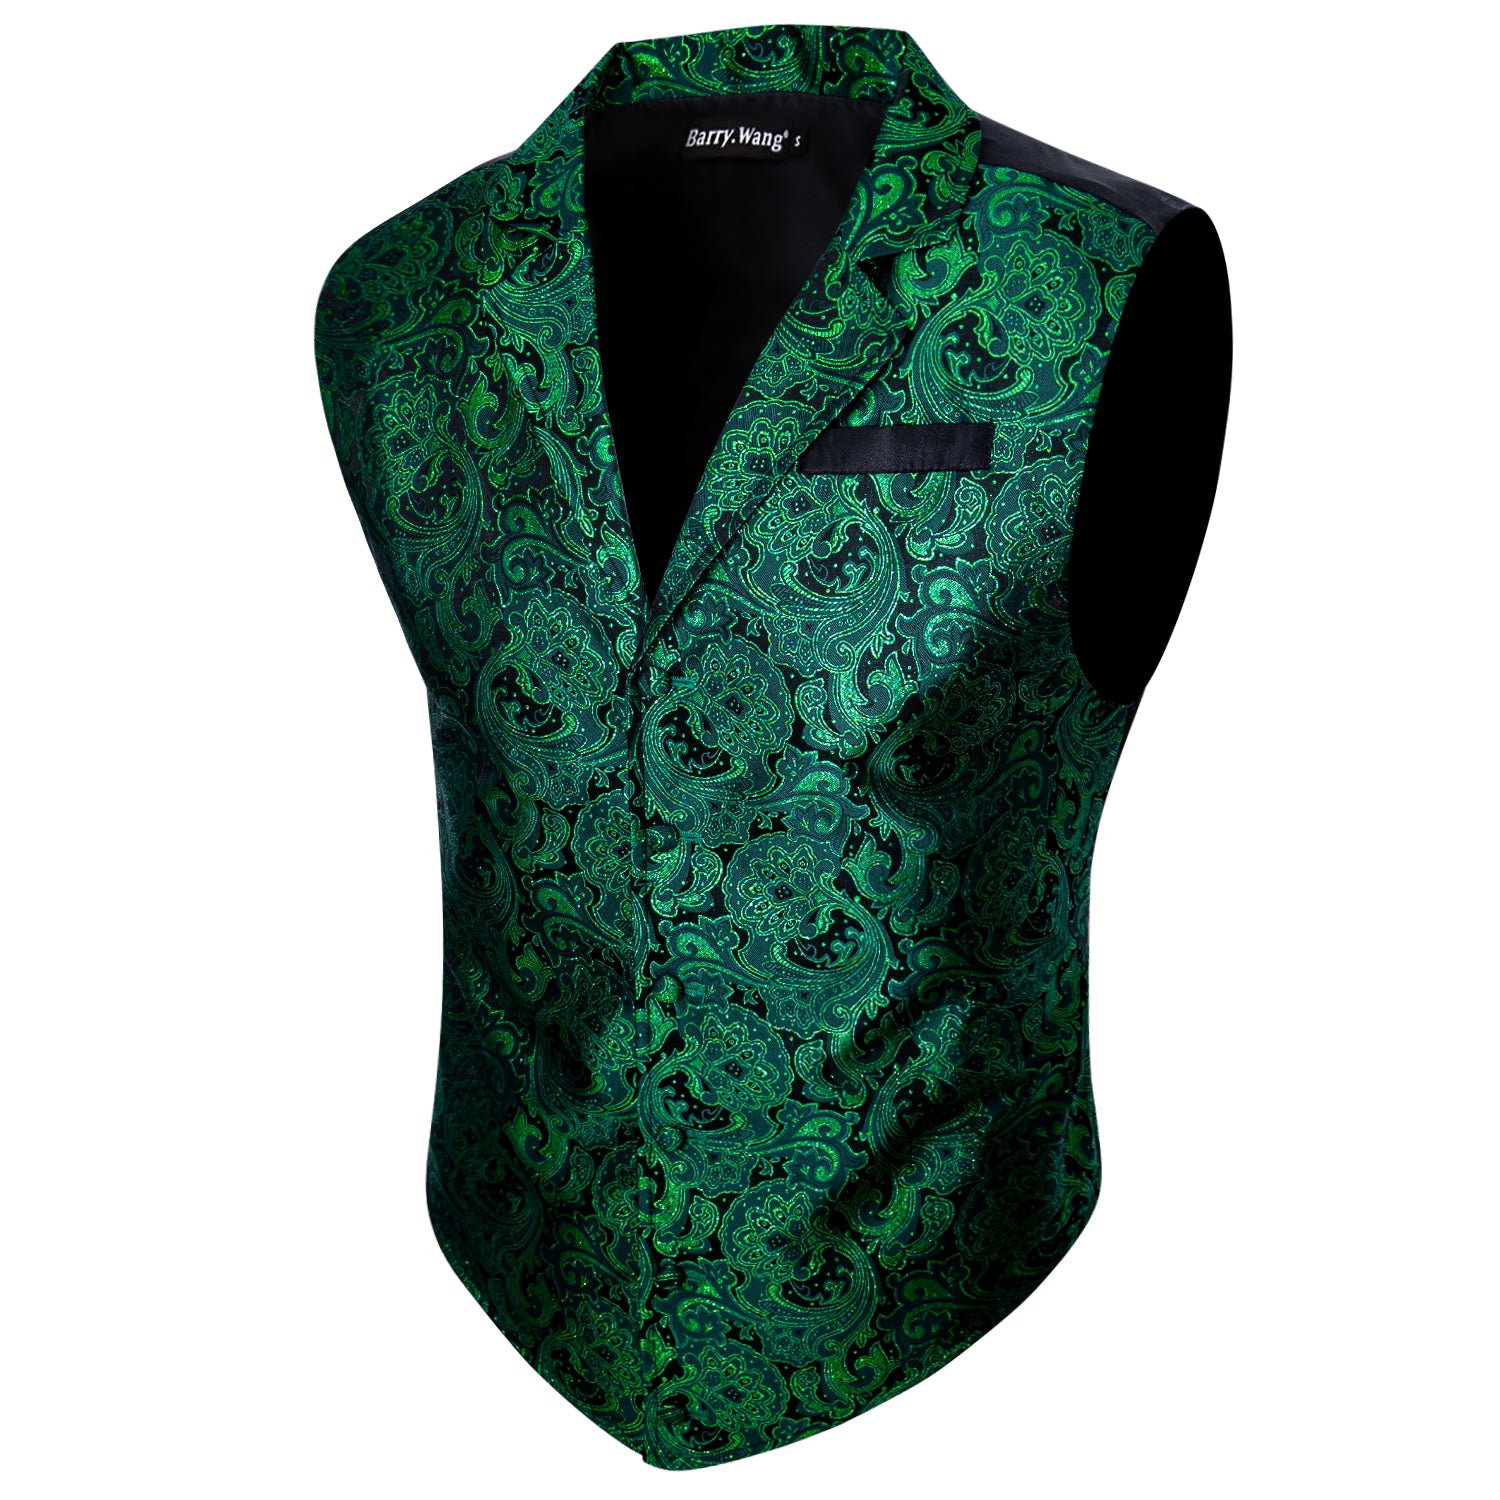 Barry.wang Men's Vest Green Jacquard Floral Silk Vest for Business